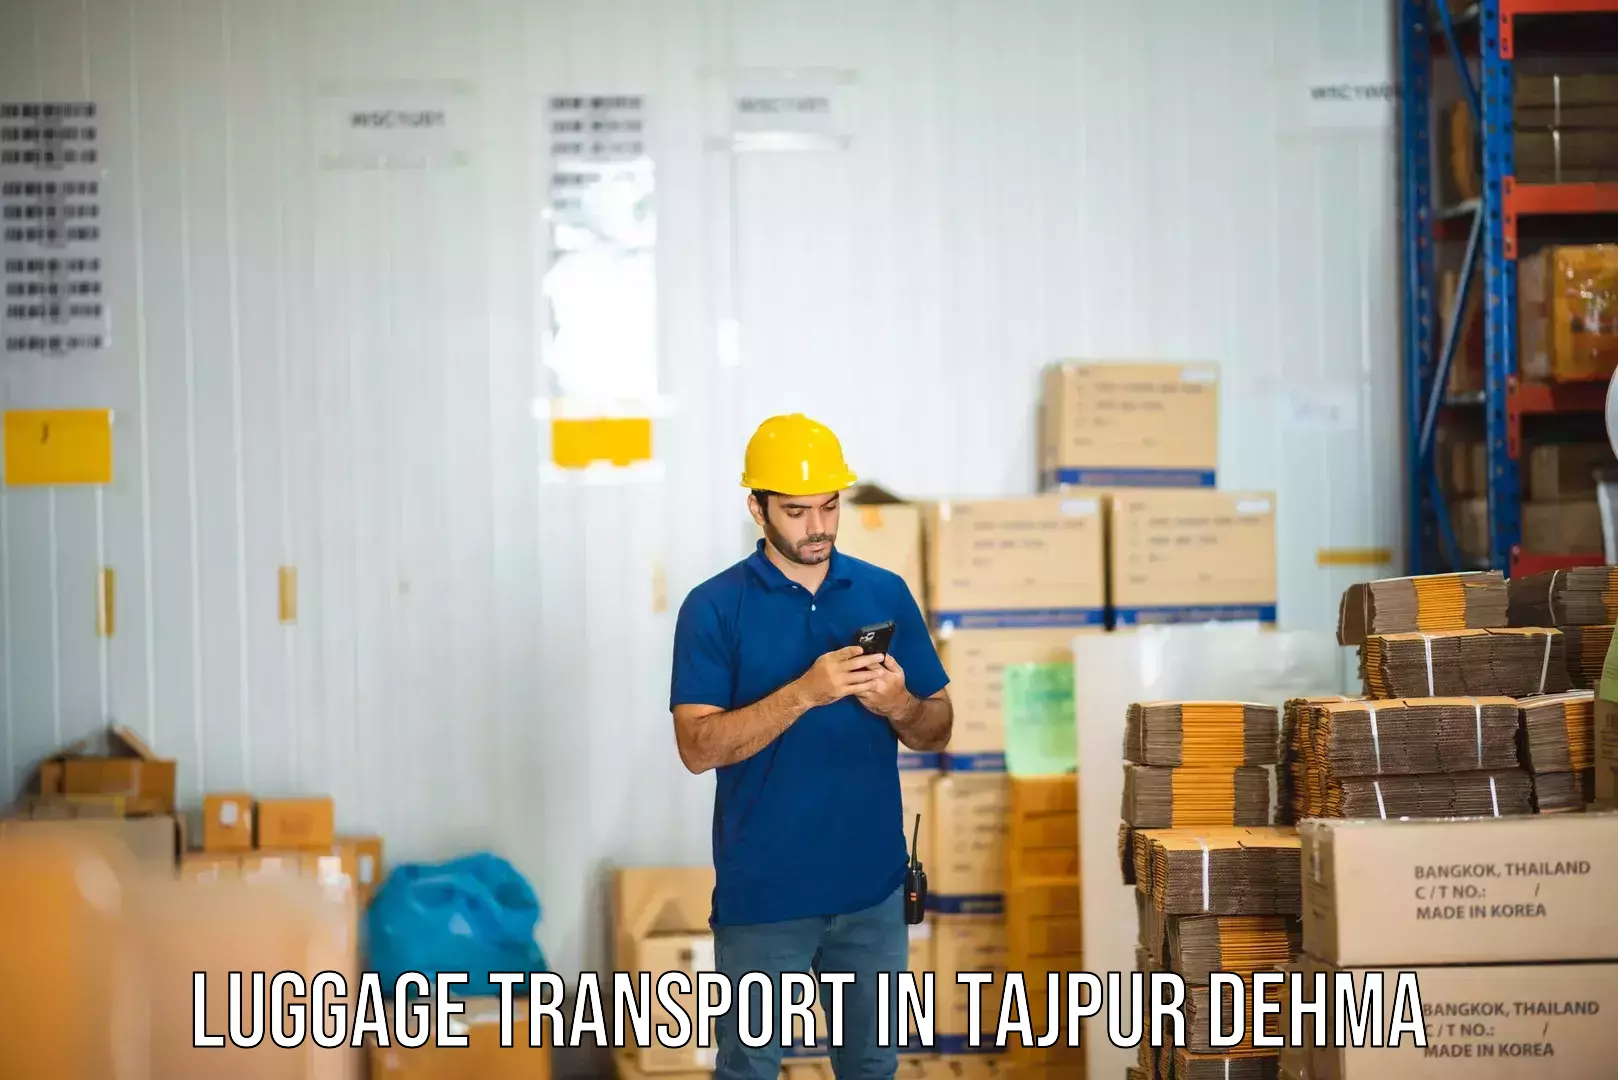 Personal luggage delivery in Tajpur Dehma